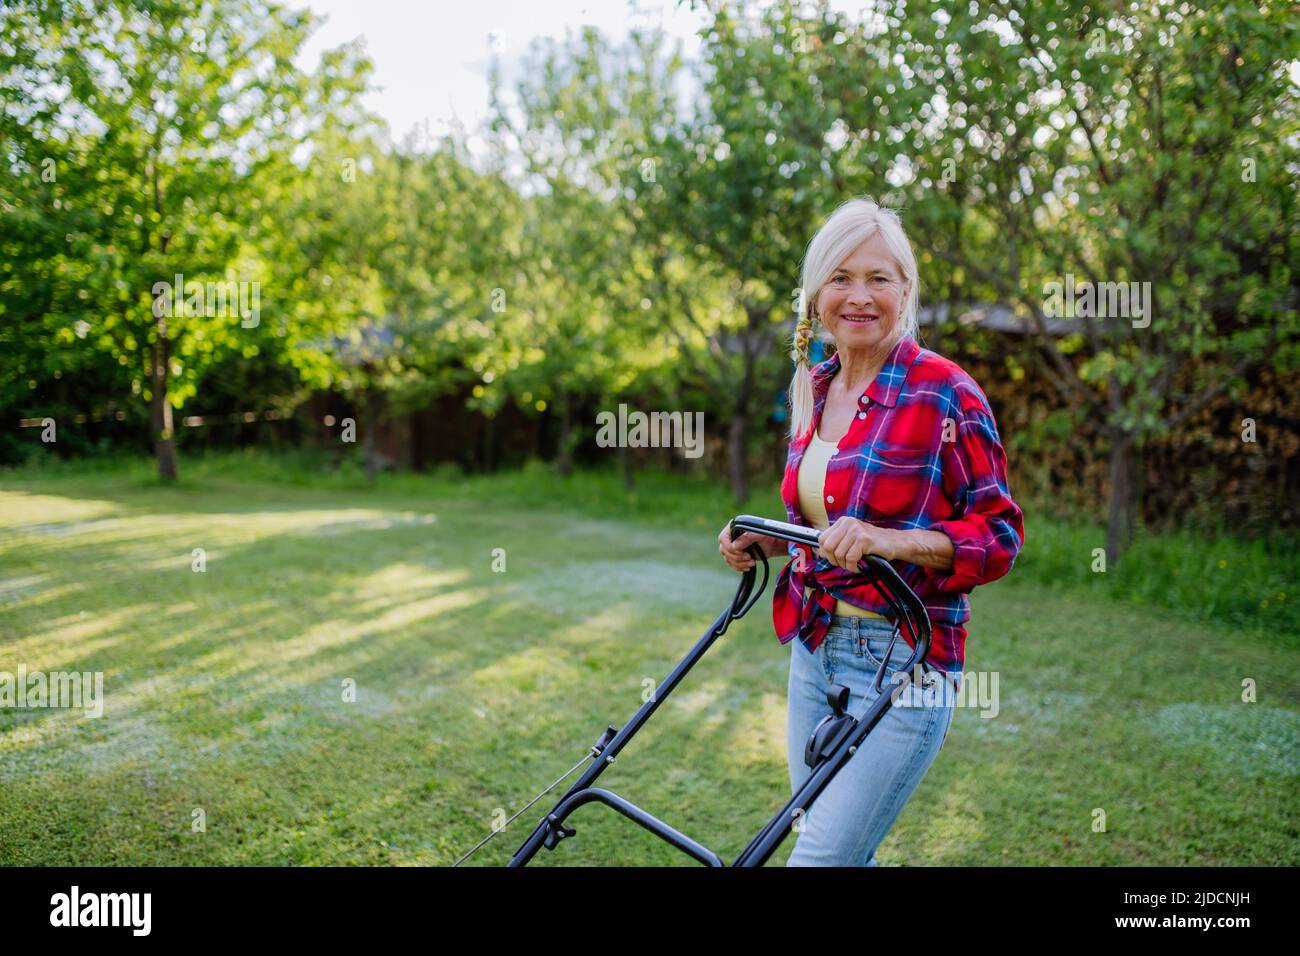 Ältere Frau mäht Gras mit Rasenmäher im Garten, Gartenarbeit Konzept. Stockfoto